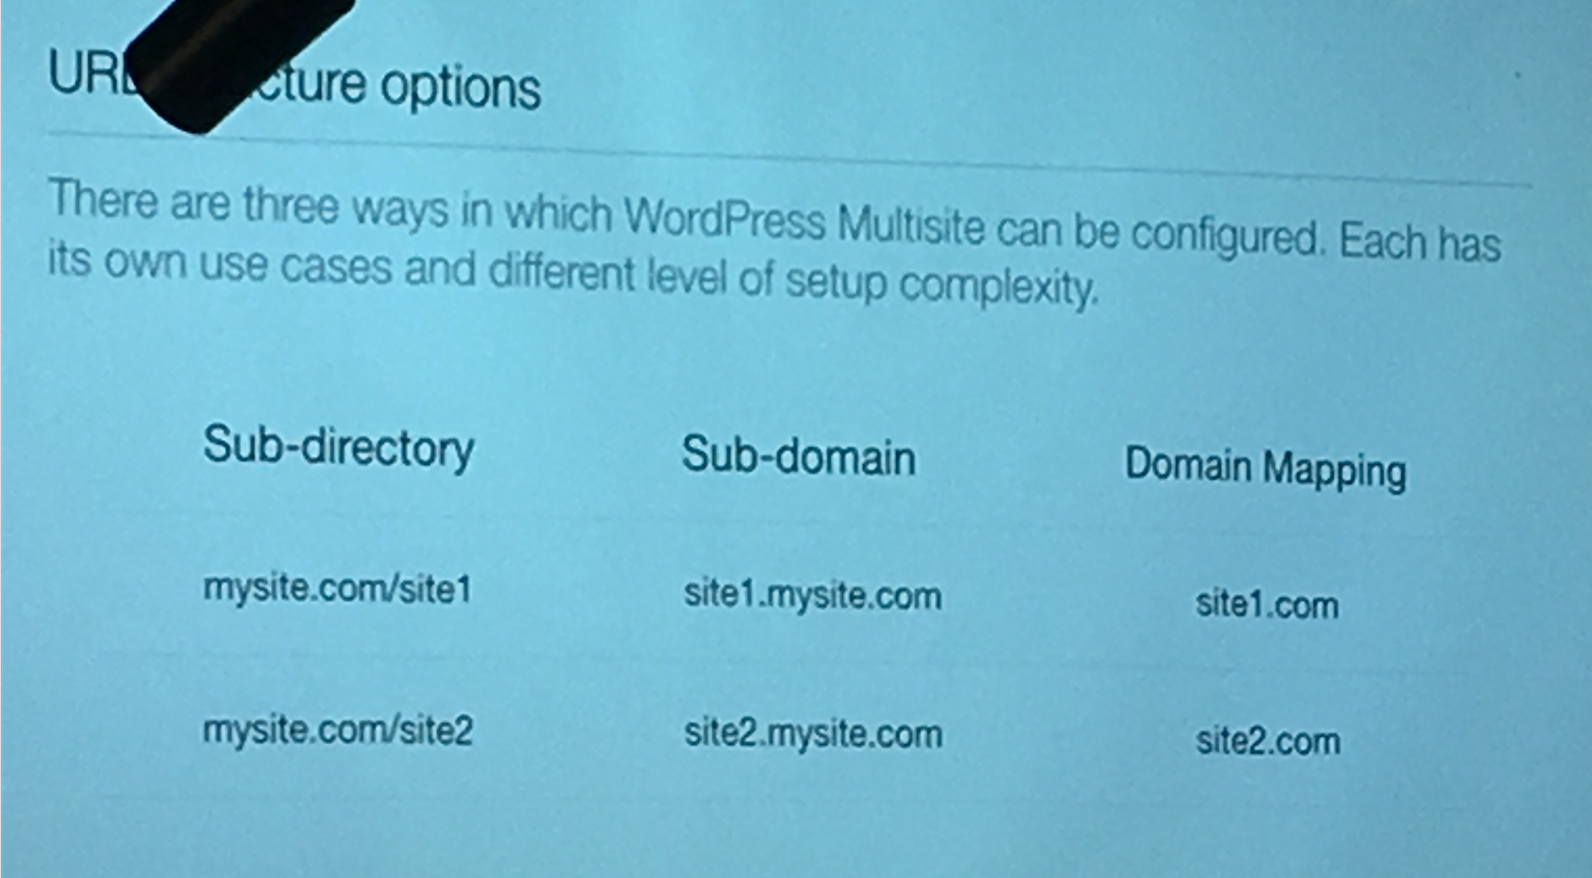 Wordpress multisite URL structure options